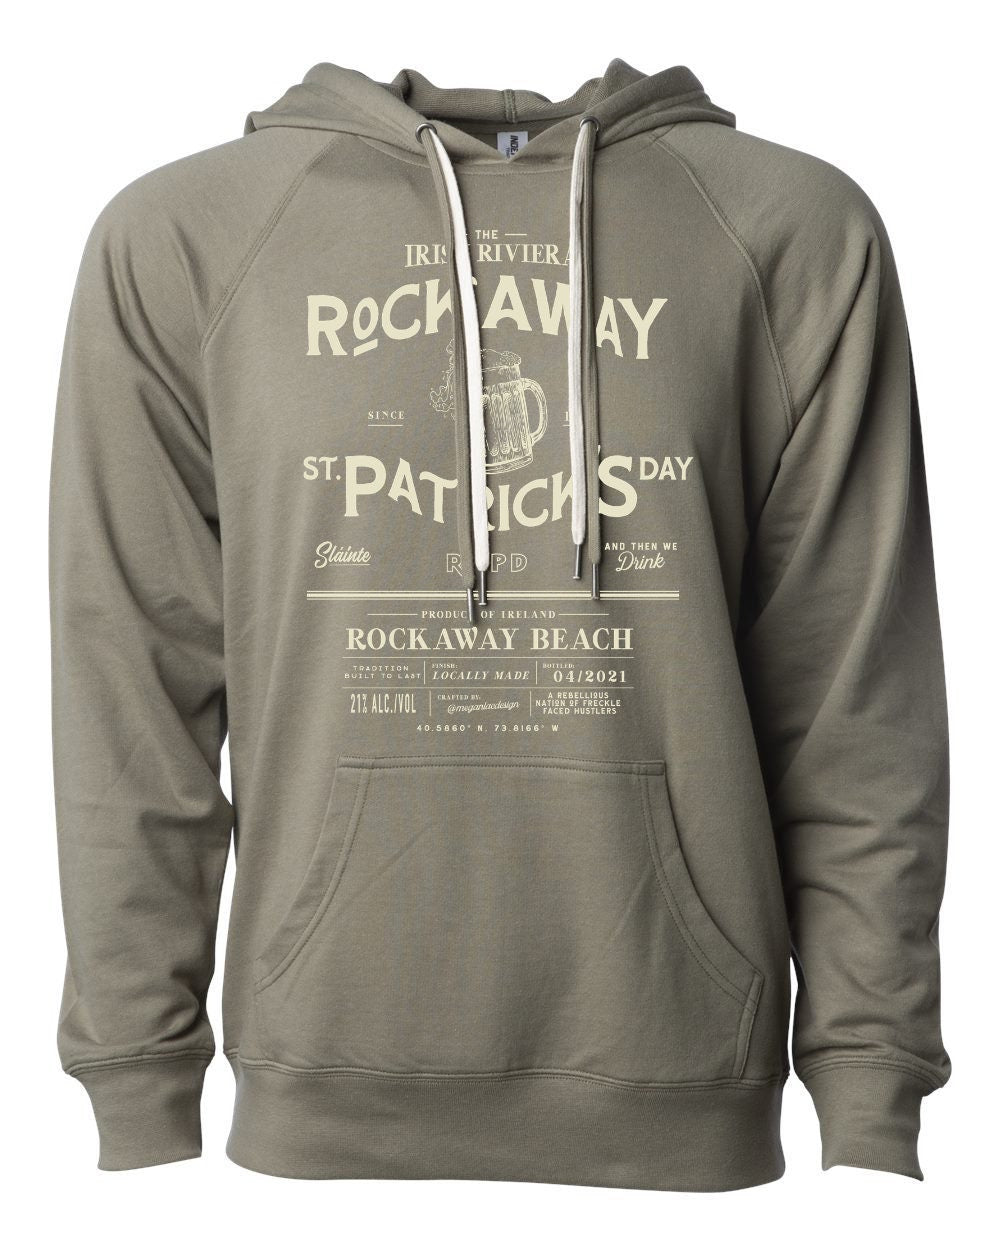 Rockaway St. Paddy's Day Shirt